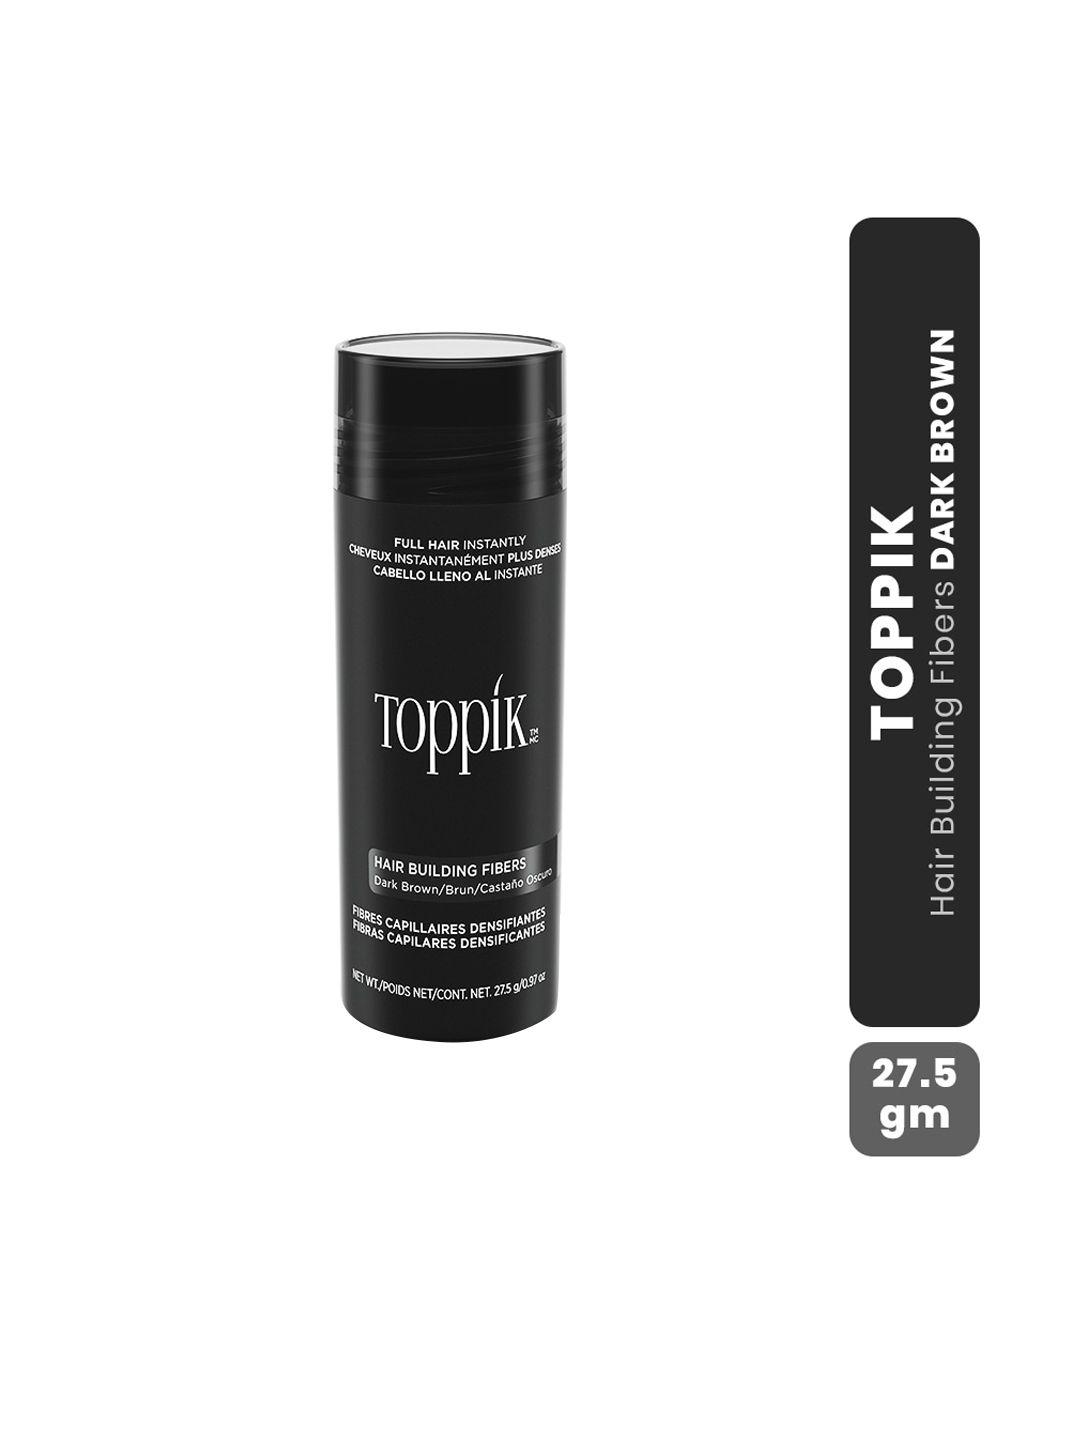 toppik hair building fibers for thinning hair 27.5g - dark brown